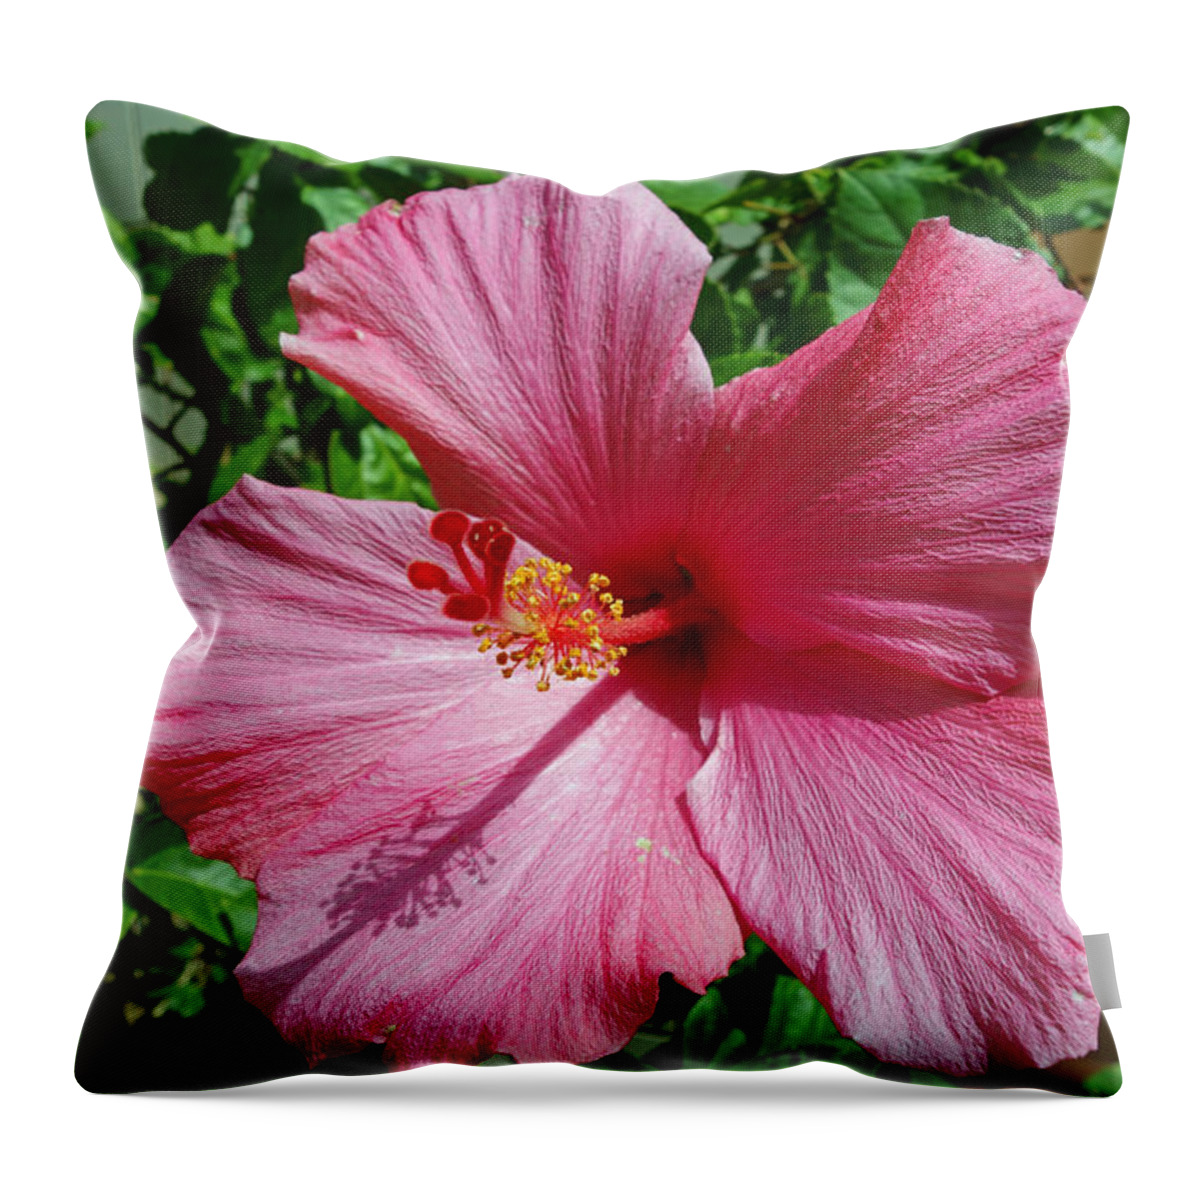 Flower Throw Pillow featuring the photograph Hibiscus flower by Gary Corbett